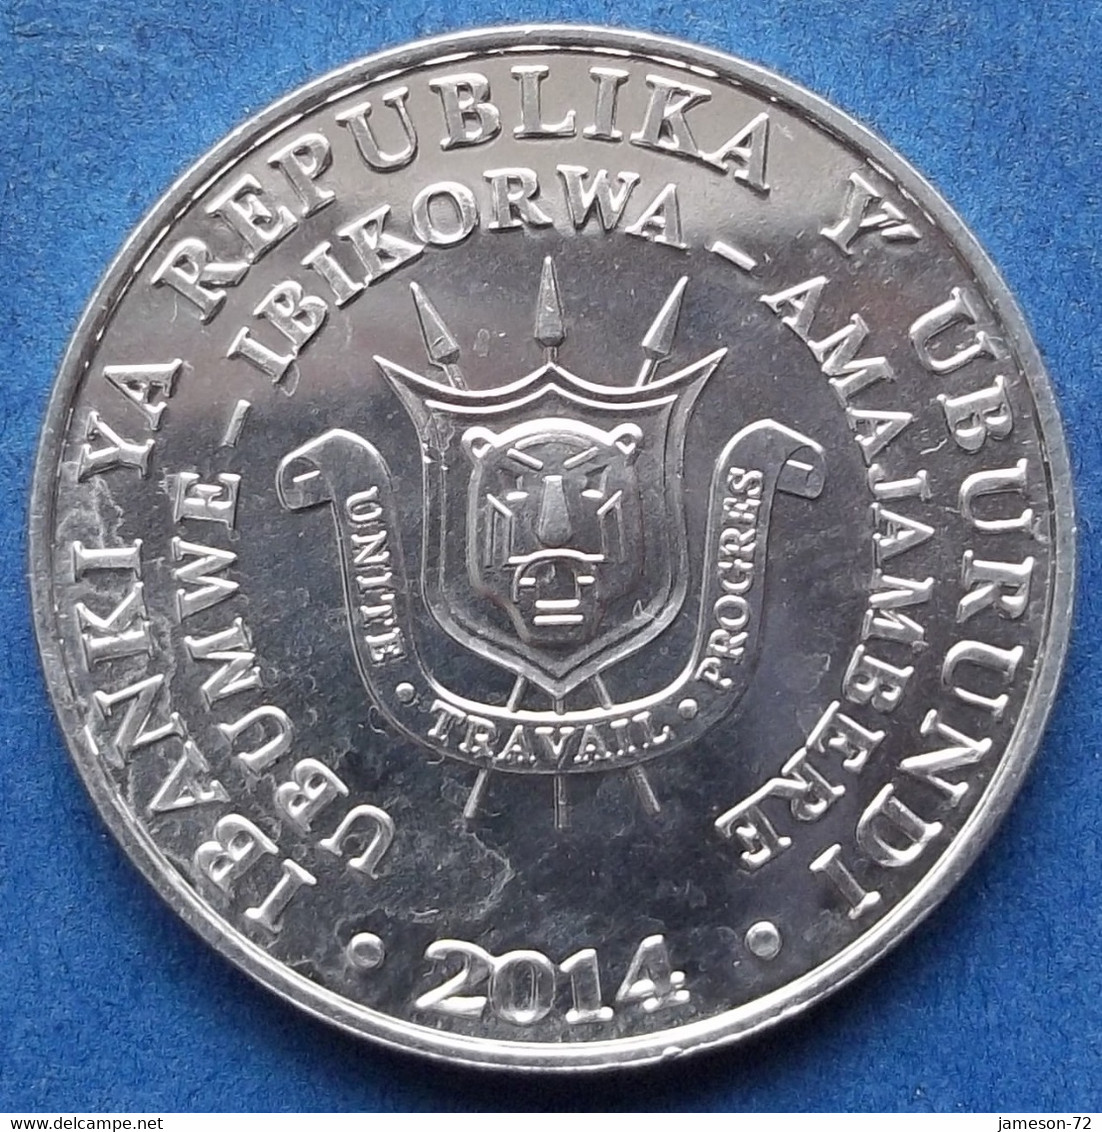 BURUNDI - 5 Francs 2014 "Stephanoaetus Coronatus" KM# 25 Republic (1966) - Edelweiss Coins - Burundi